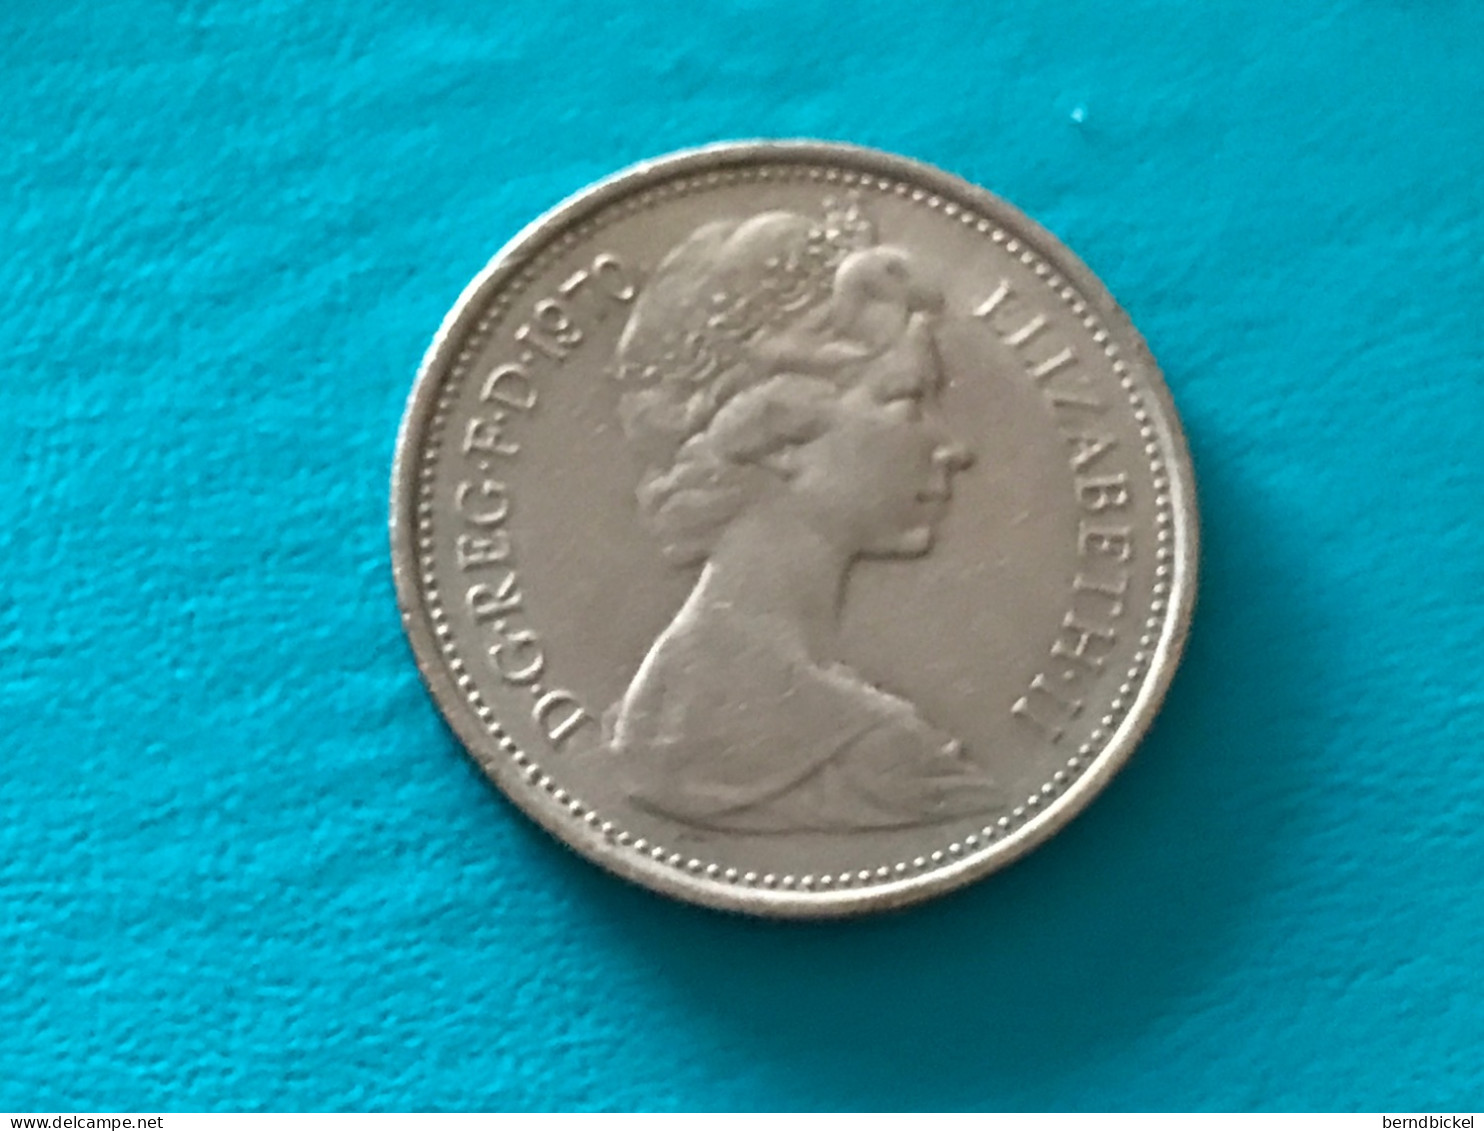 Münze Münzen Umlaufmünze Großbritannien 5 New Pence 1970 - 5 Pence & 5 New Pence